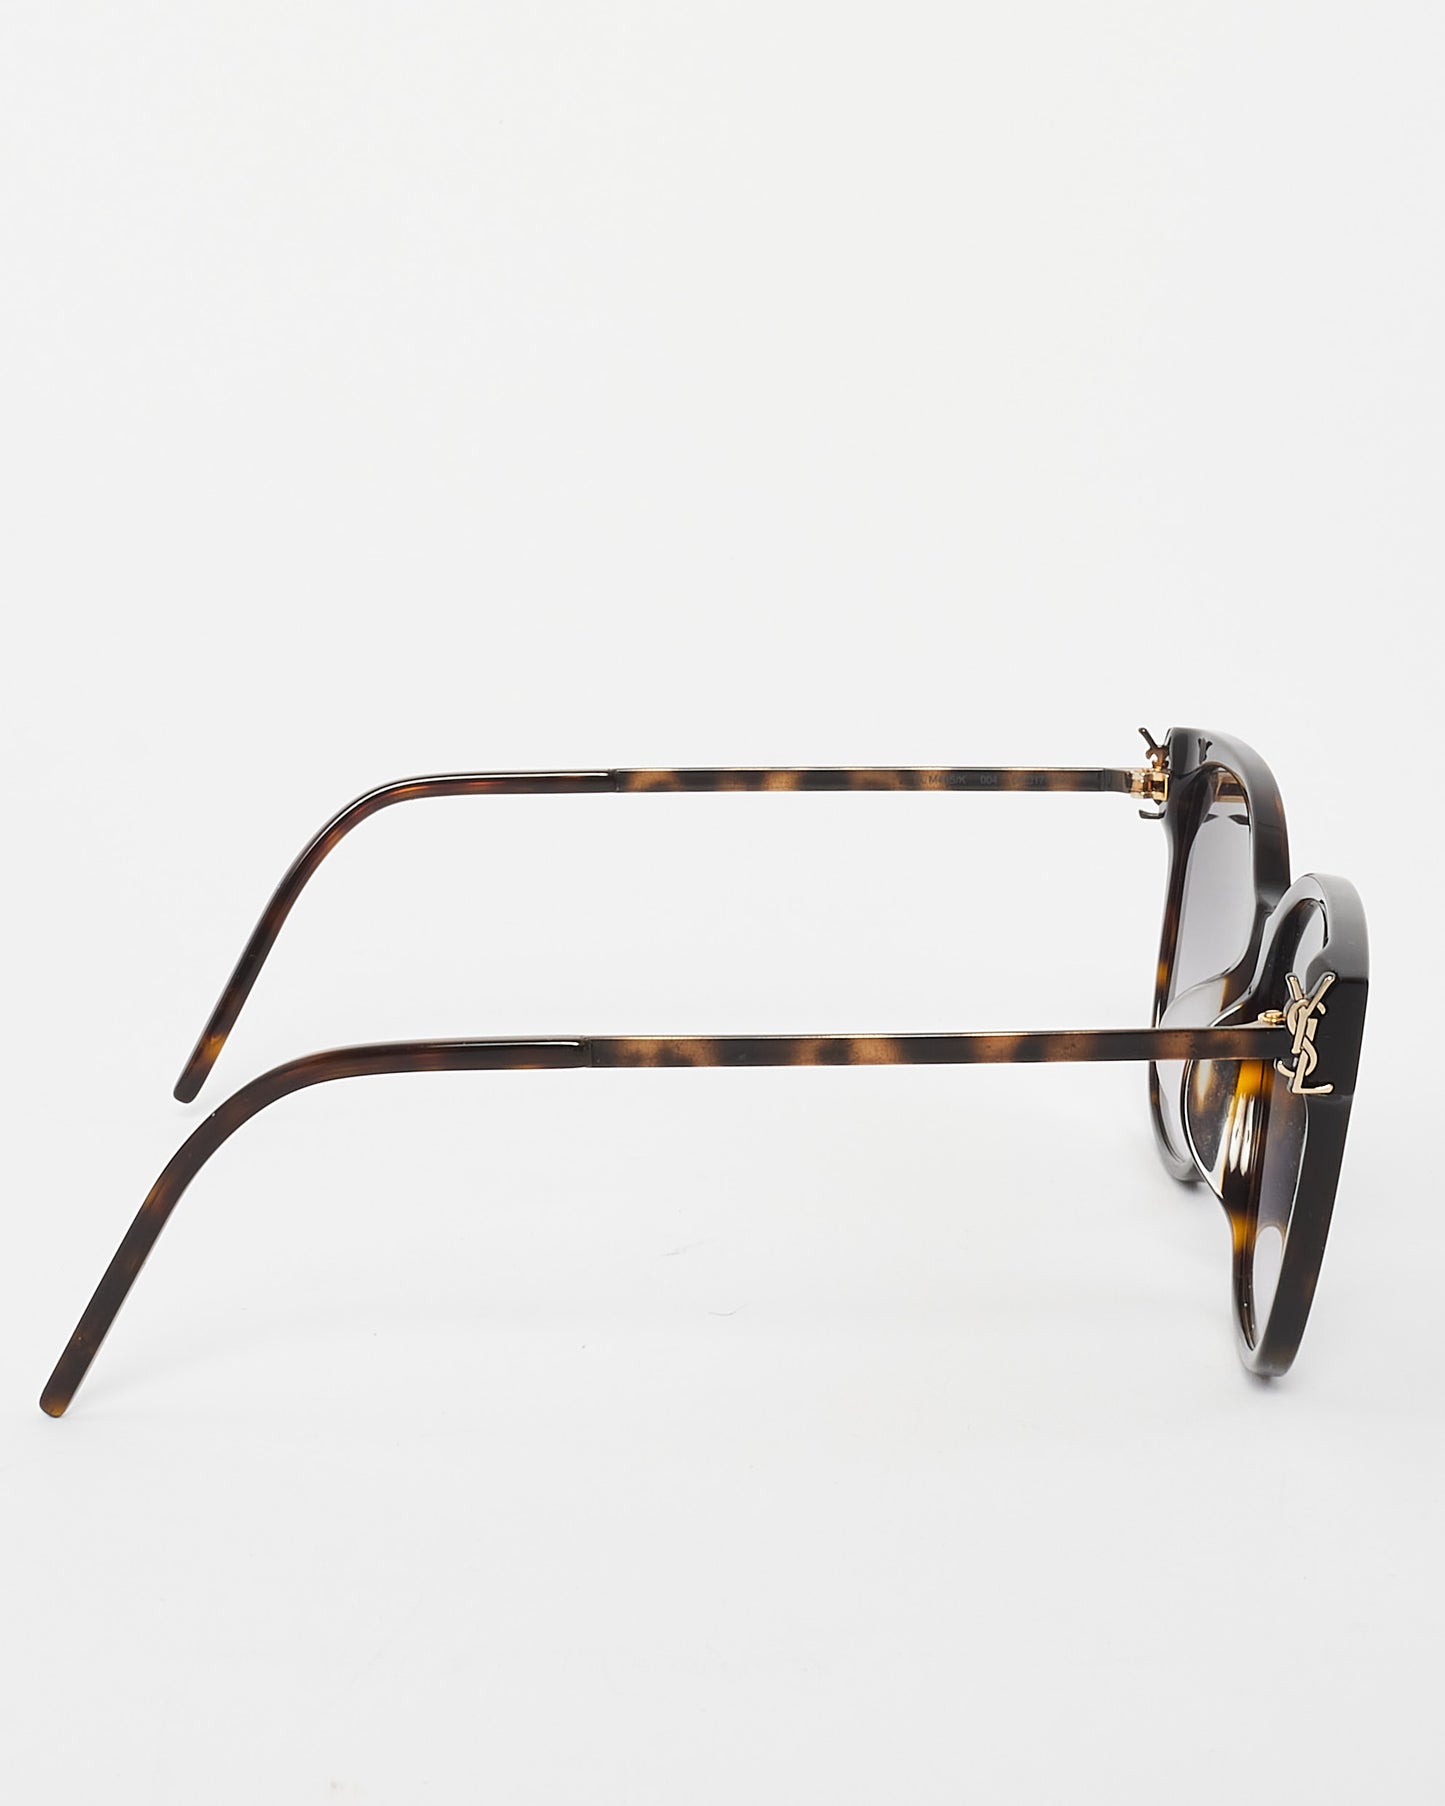 Saint Laurent Brown Tortoise Acetate Square Frame Sunglasses -SLM48SK